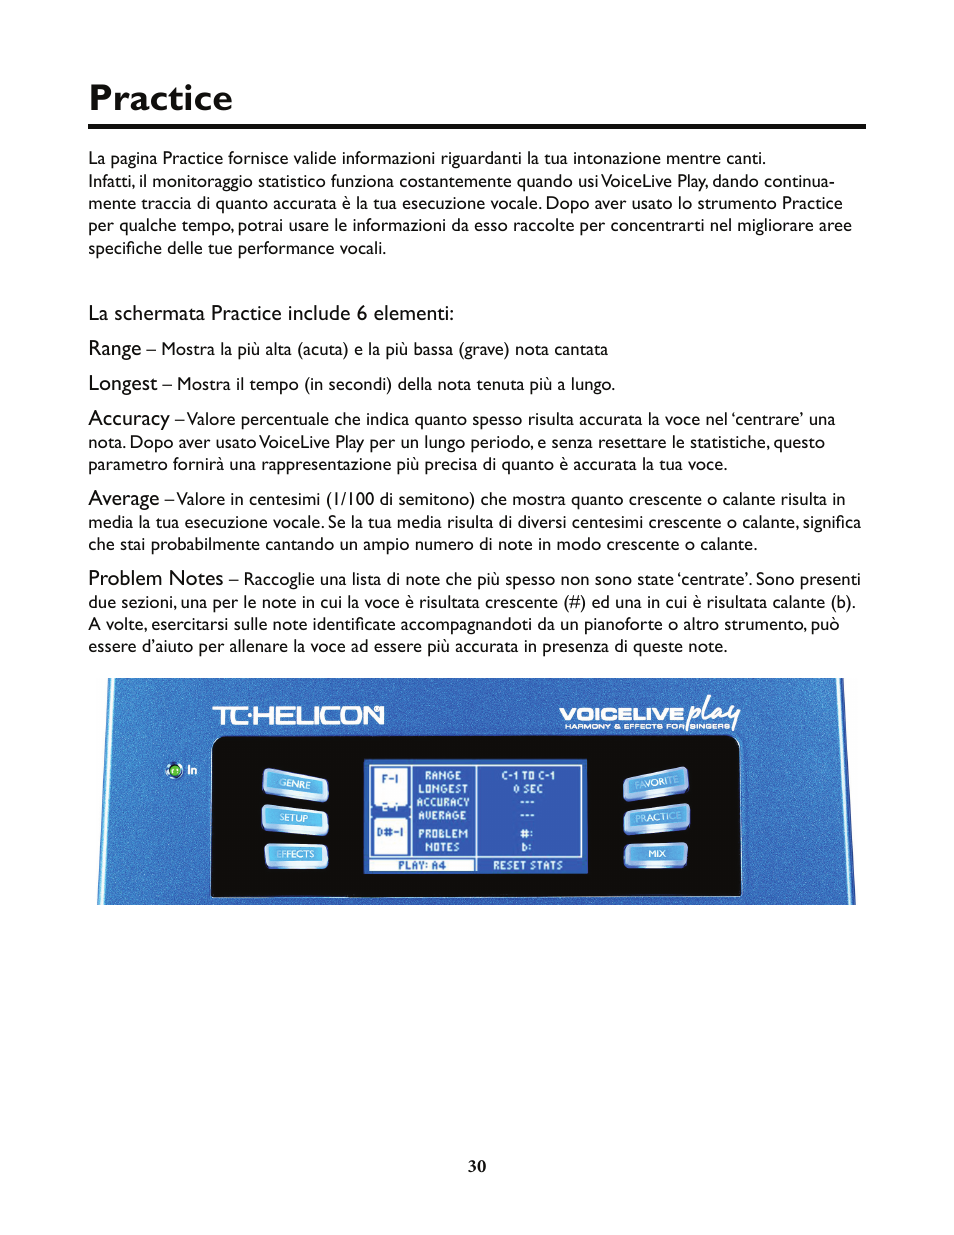 Practice Tc Helicon Voicelive Play Details Manual Manuale D Uso Pagina 30 32 Modalita Originale